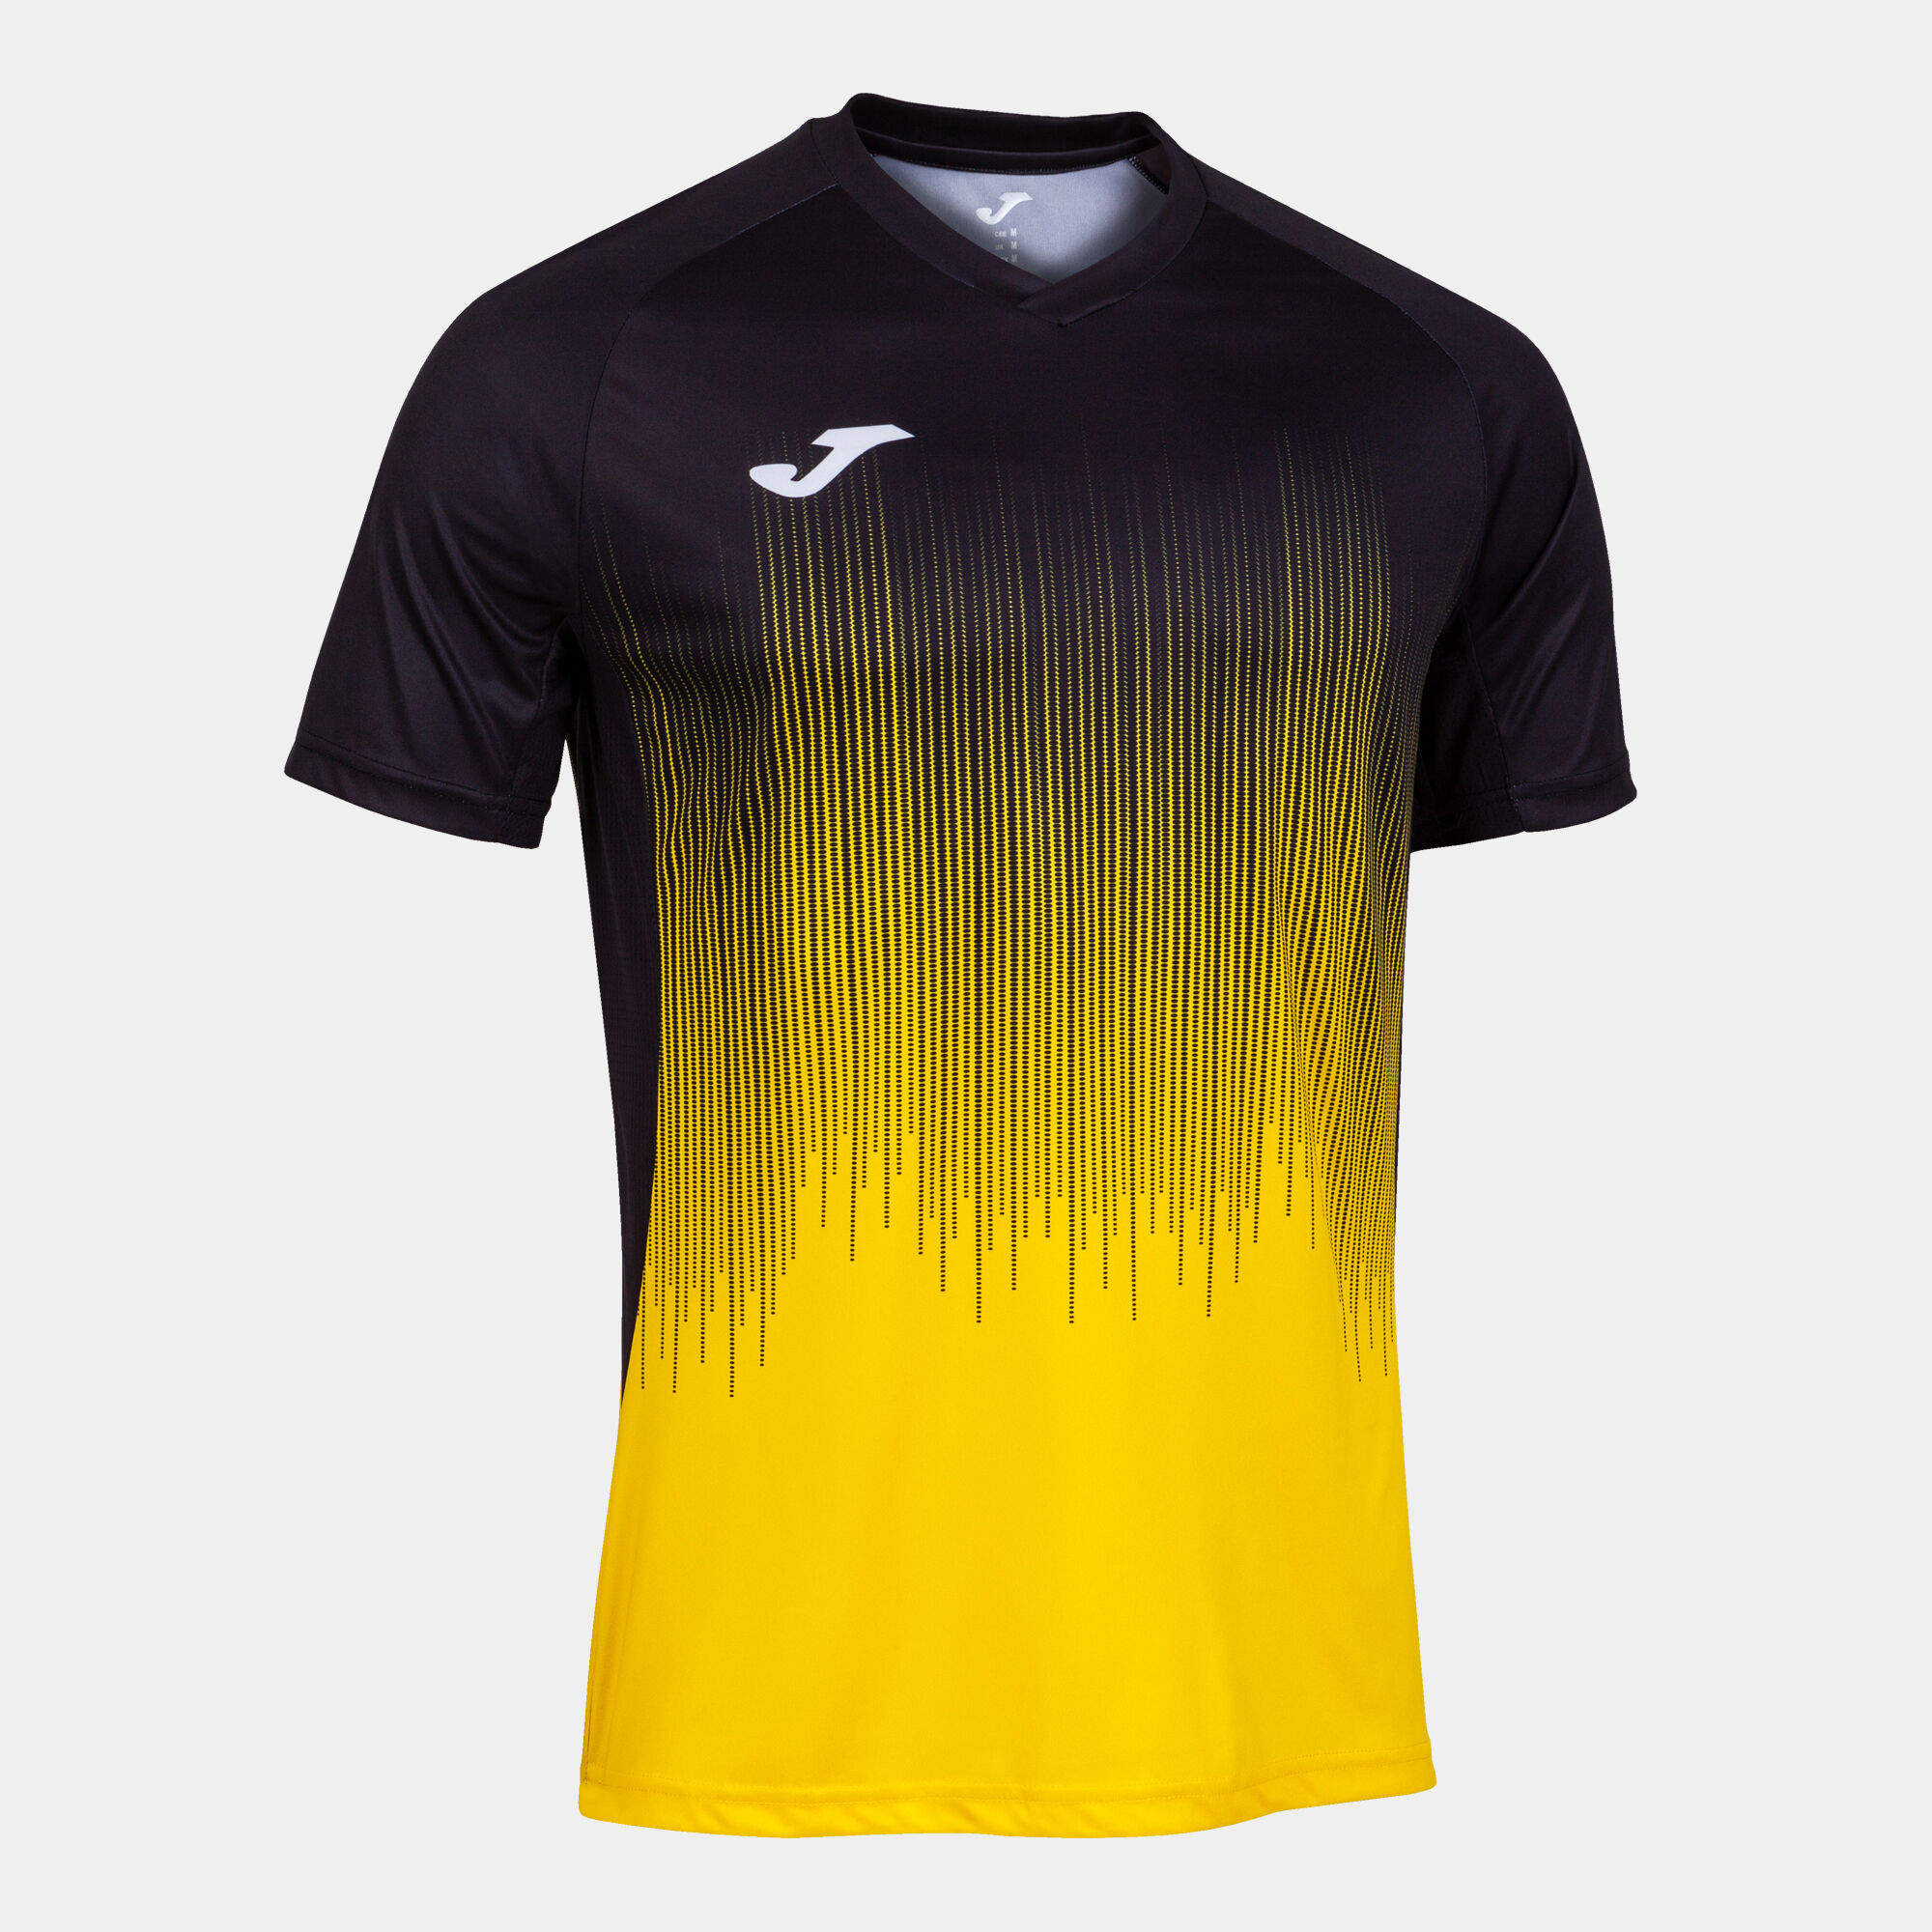 Joma Camiseta Europa Iv Amarillo-Marino M/C, Hombre